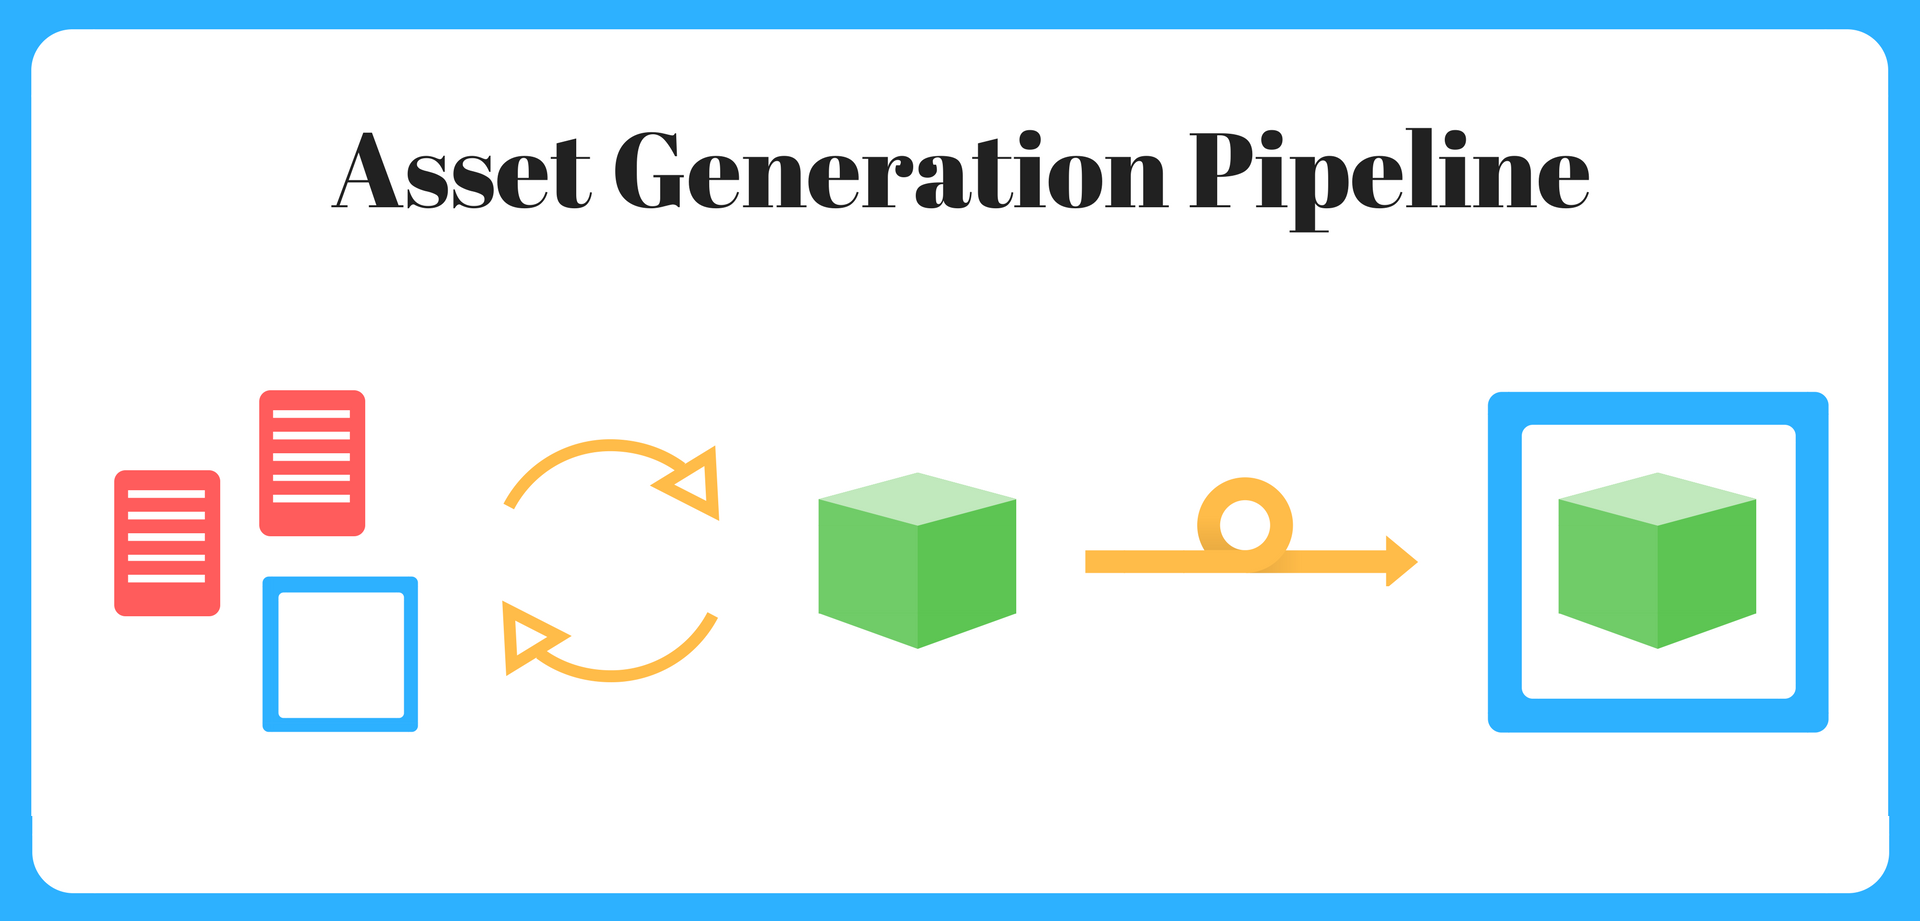 Asset Generation Pipeline